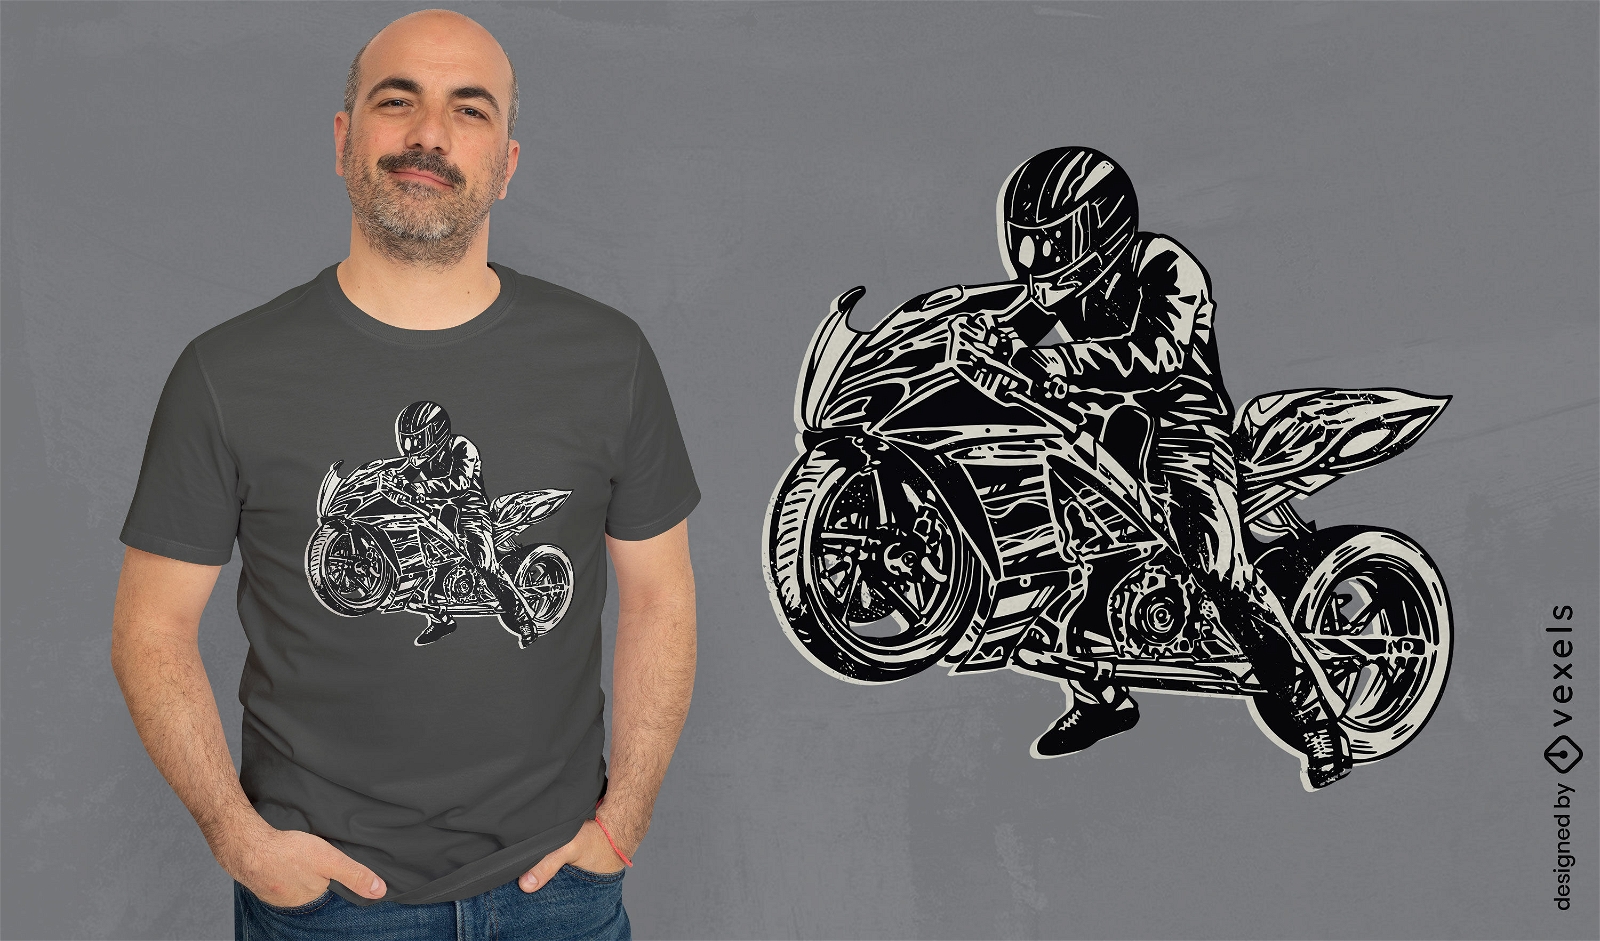 Drag bike t-shirt design